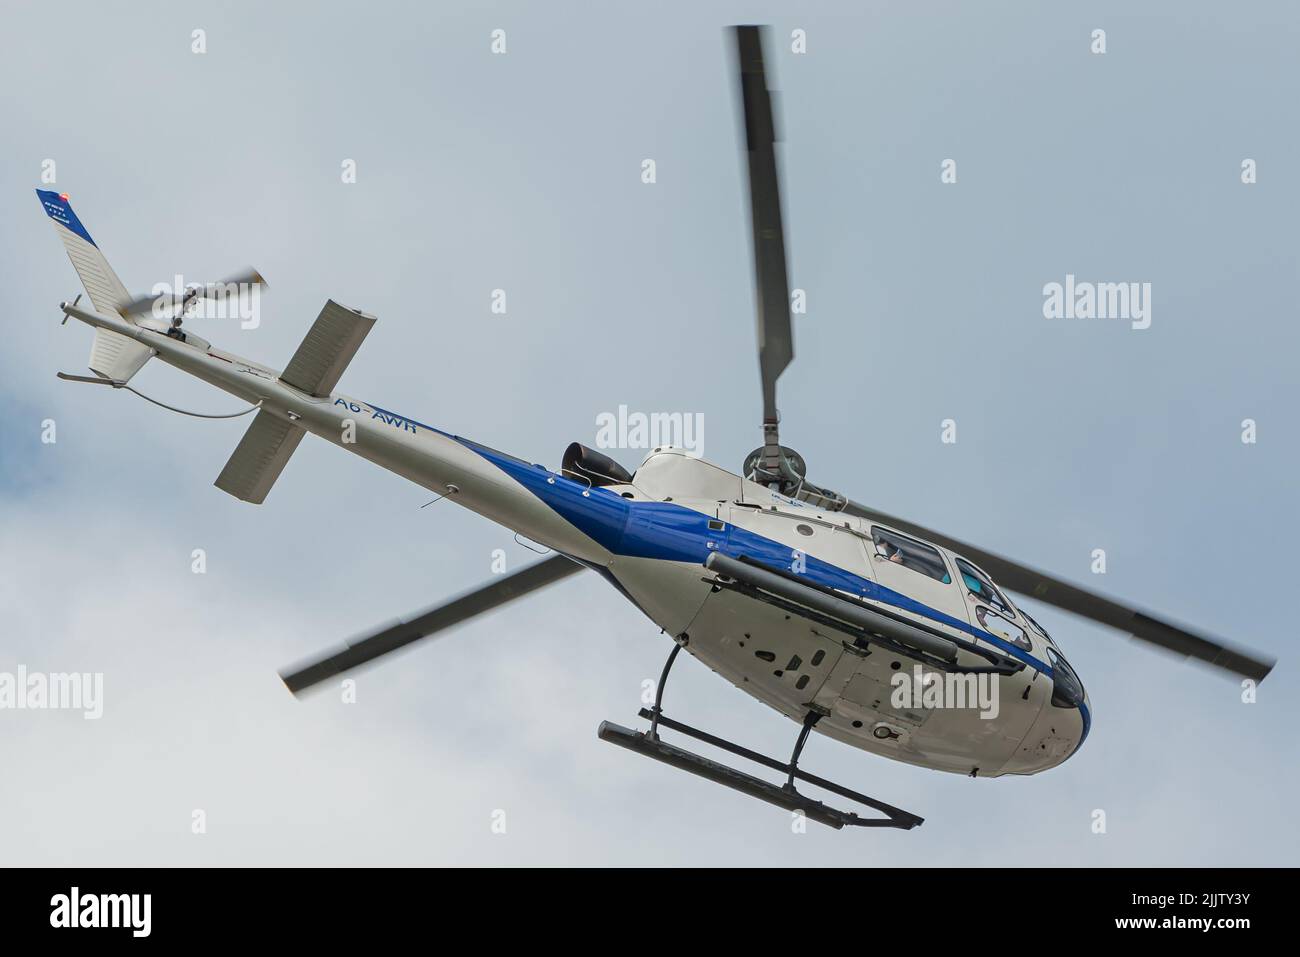 Eine Low-Angle-Aufnahme eines Helicopters Heli Dubai Tours Aerospatiale AS AS350 Ecureuil am blauen Himmel Stockfoto